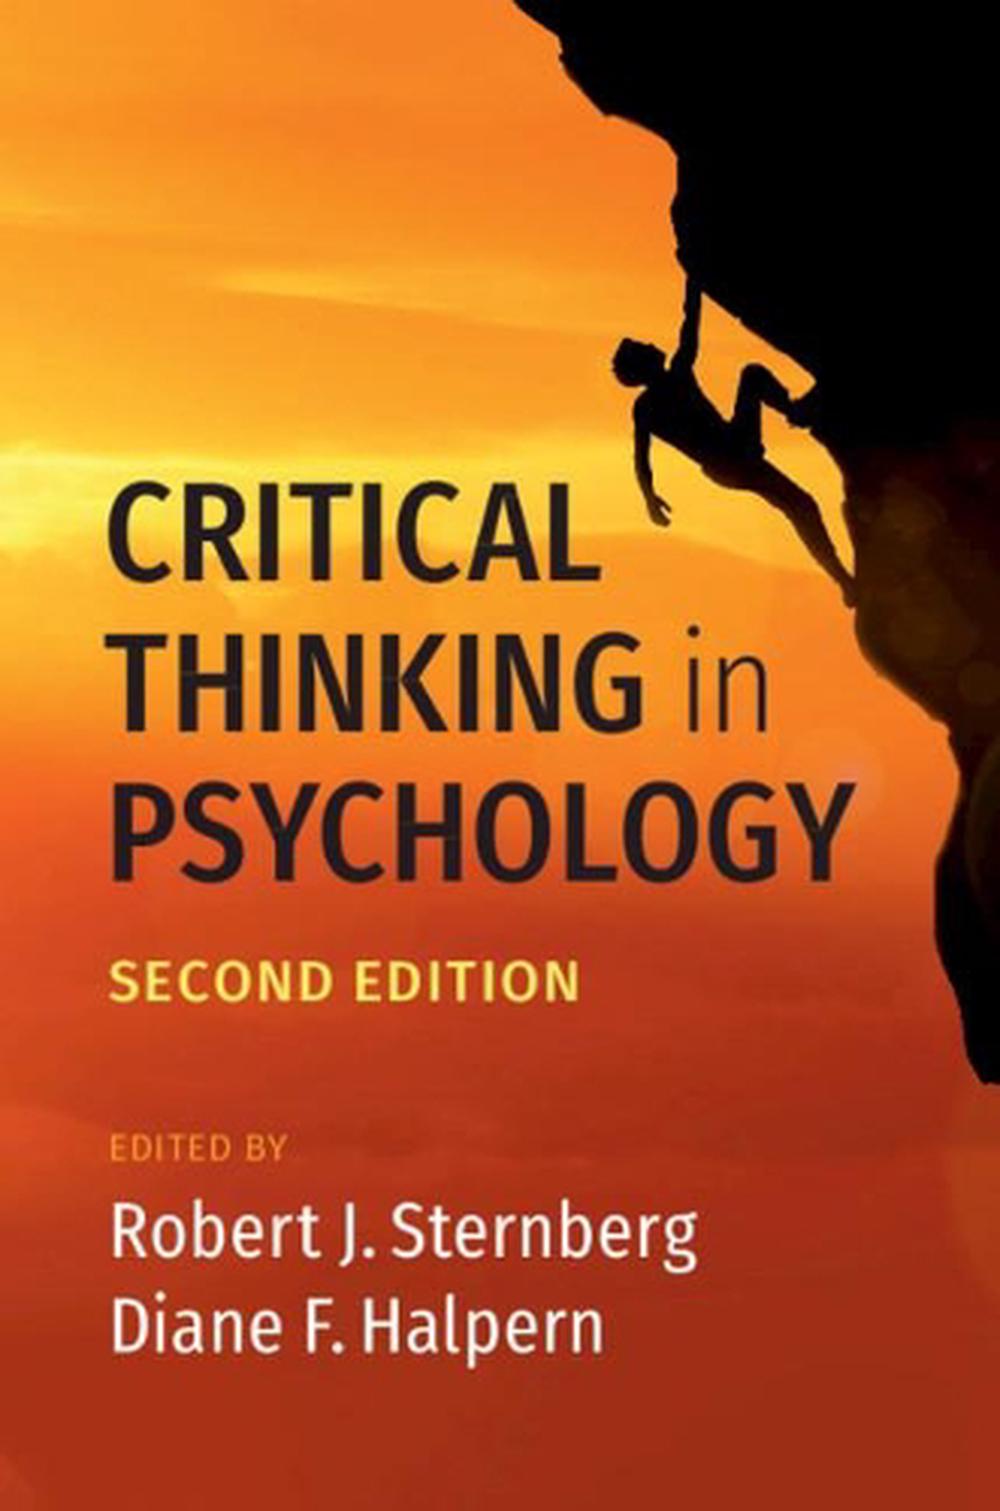 critical thinking articles topics